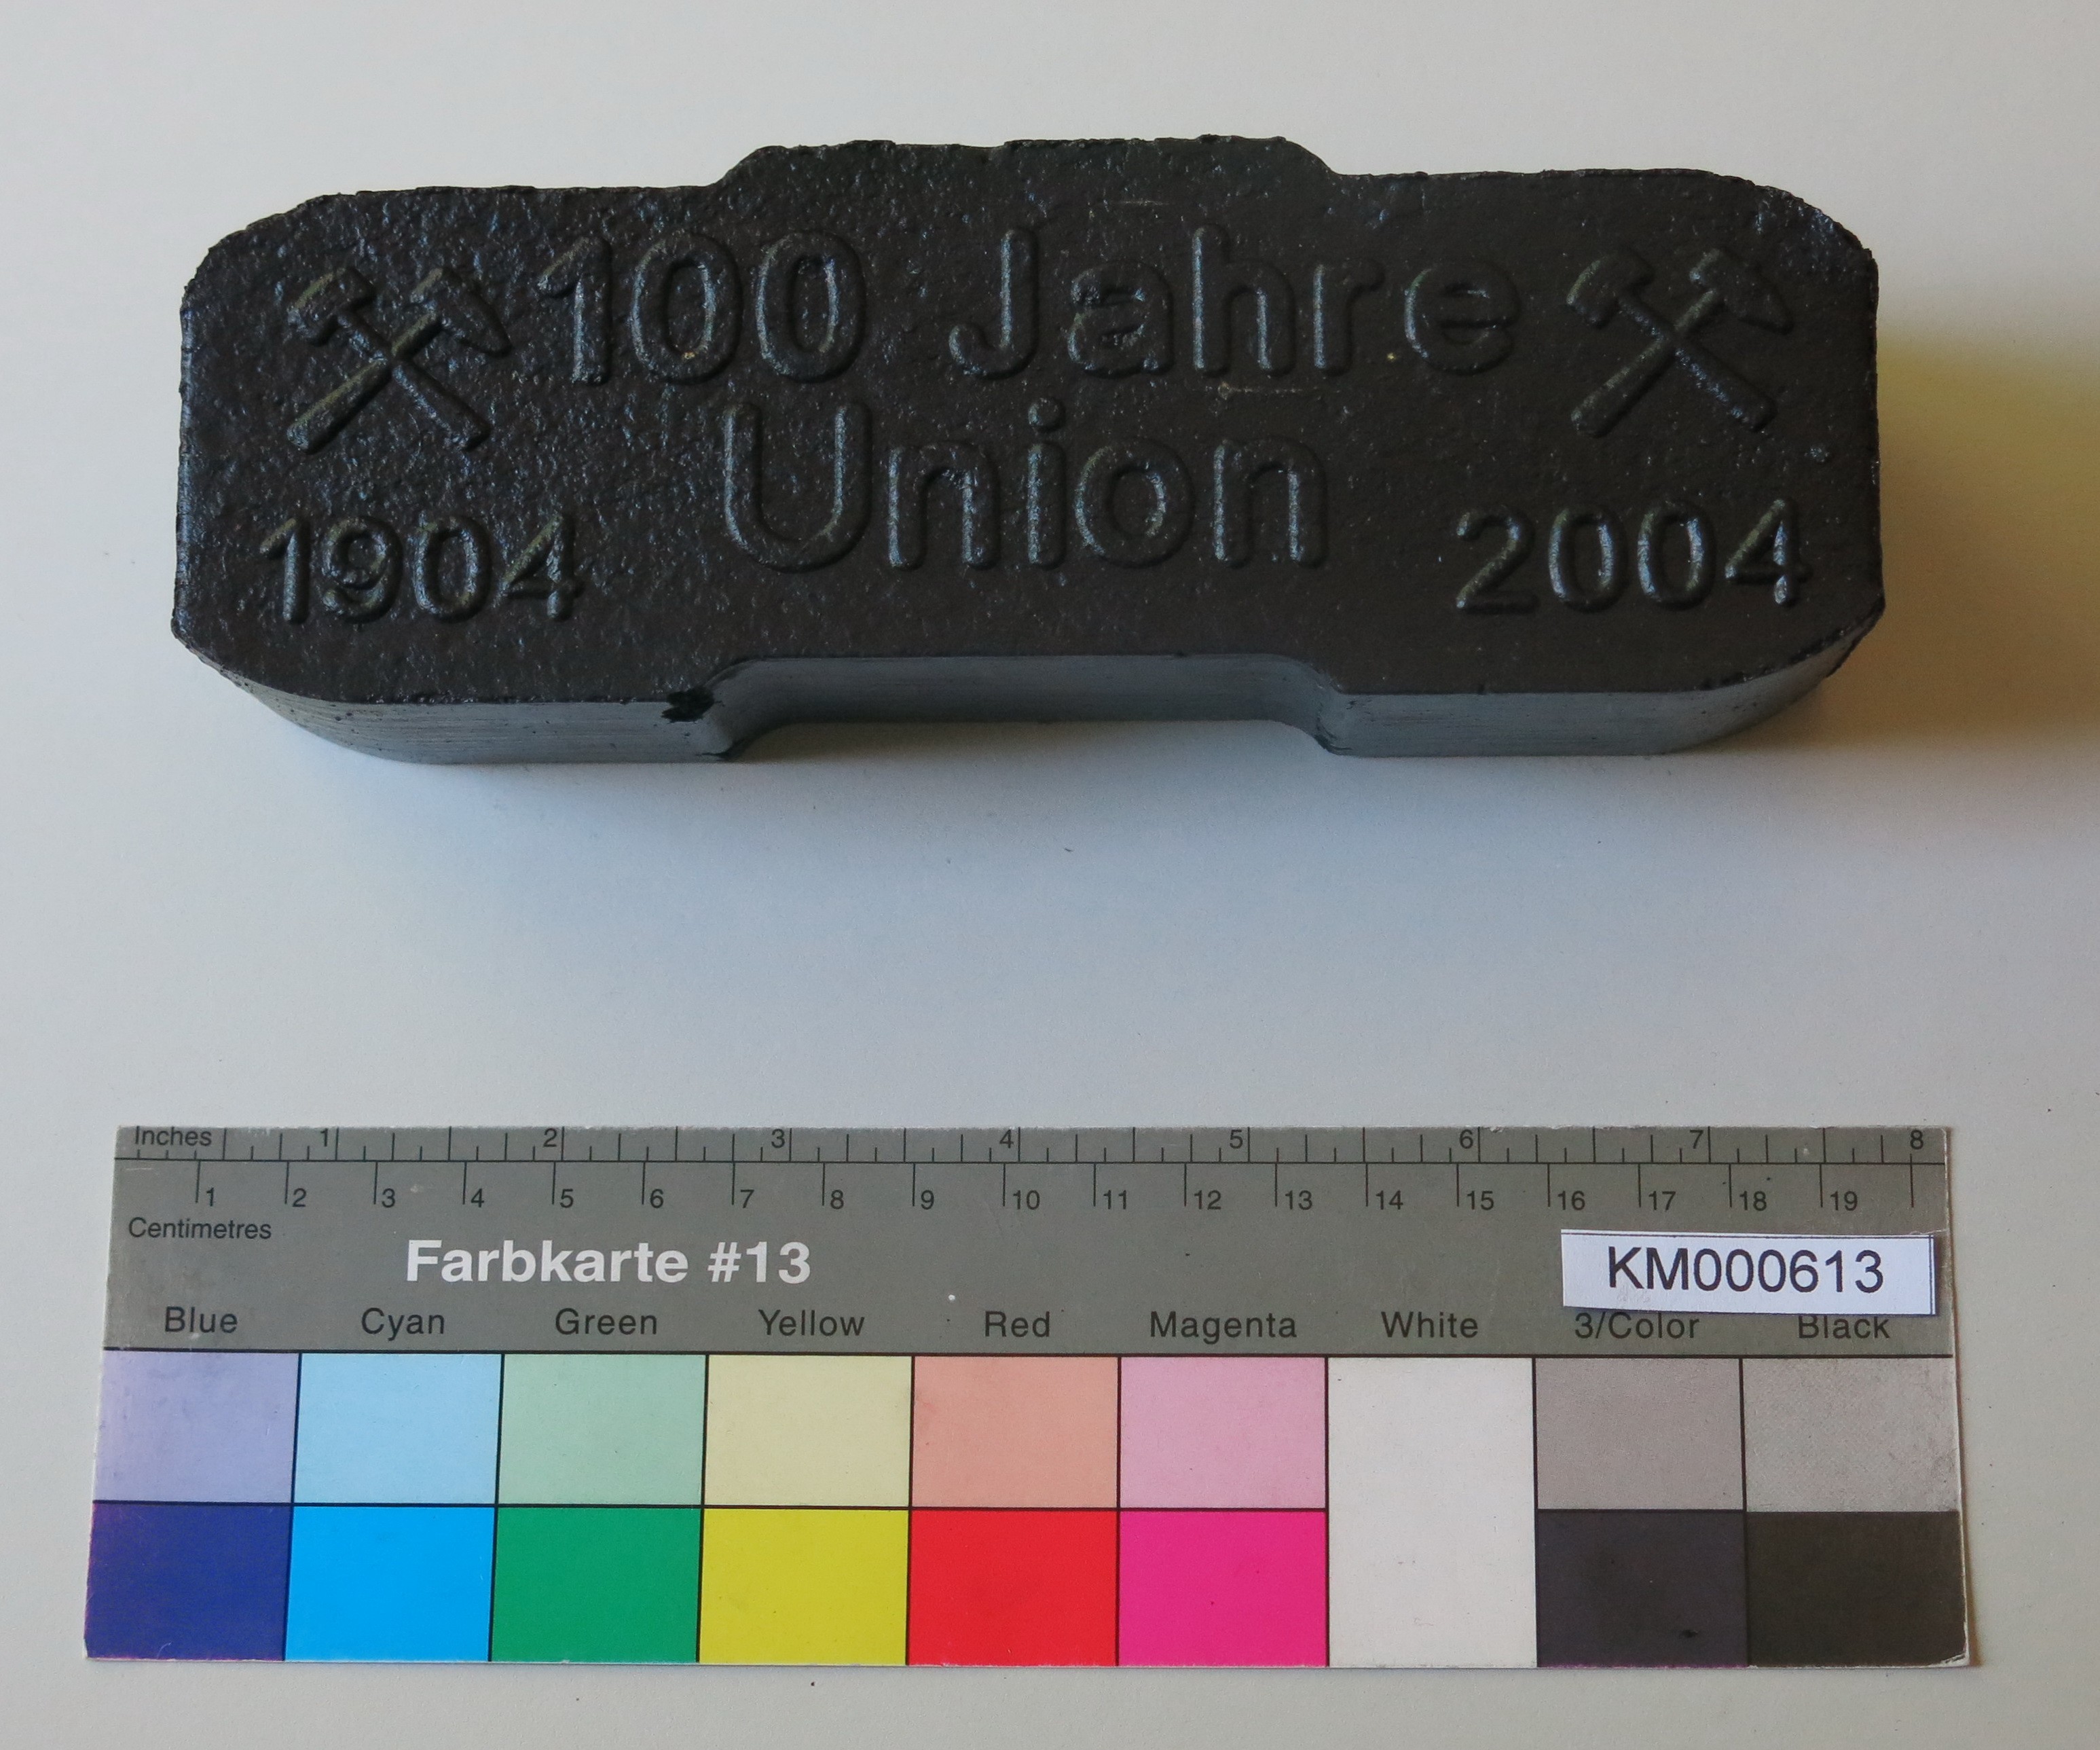 Zierbrikett "100 Jahre Union 1904 2004" (Energiefabrik Knappenrode CC BY-SA)